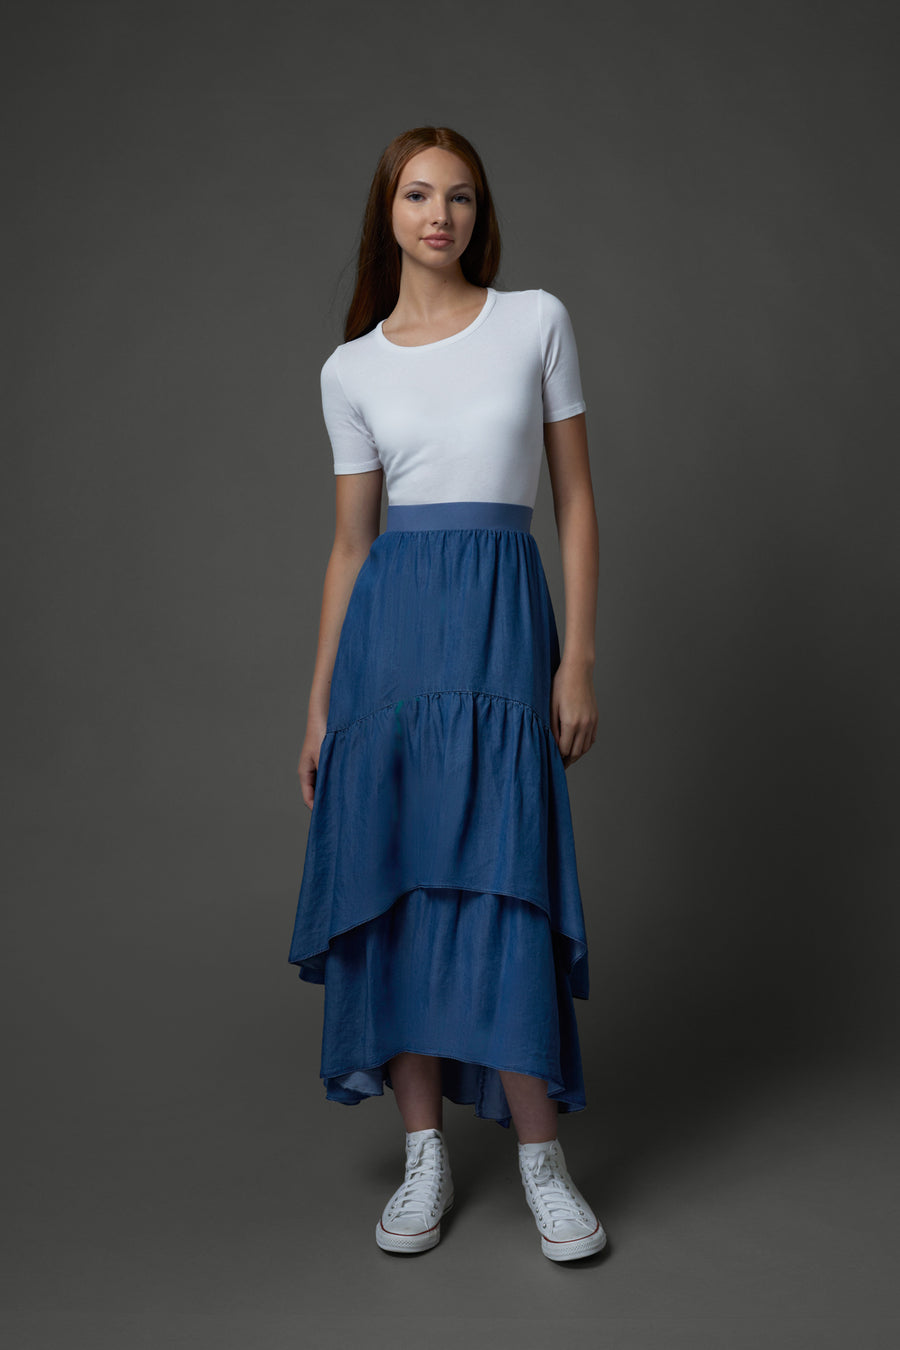 Blue denim layered skirt by Zaikamoya